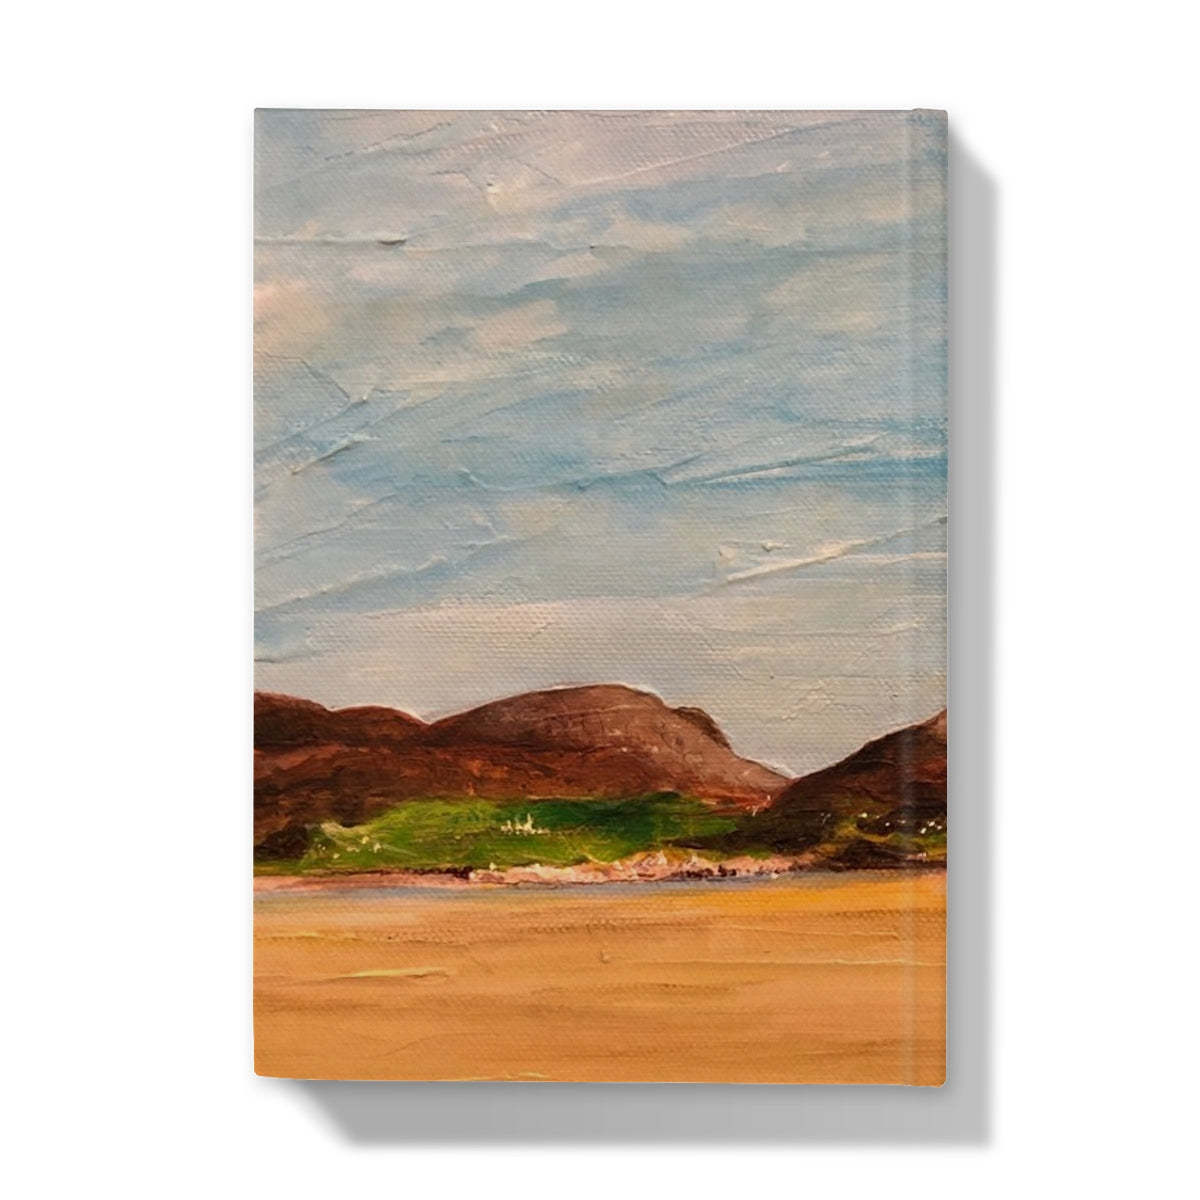 Uig Sands Lewis Art Gifts Hardback Journal-Journals & Notebooks-Hebridean Islands Art Gallery-Paintings, Prints, Homeware, Art Gifts From Scotland By Scottish Artist Kevin Hunter